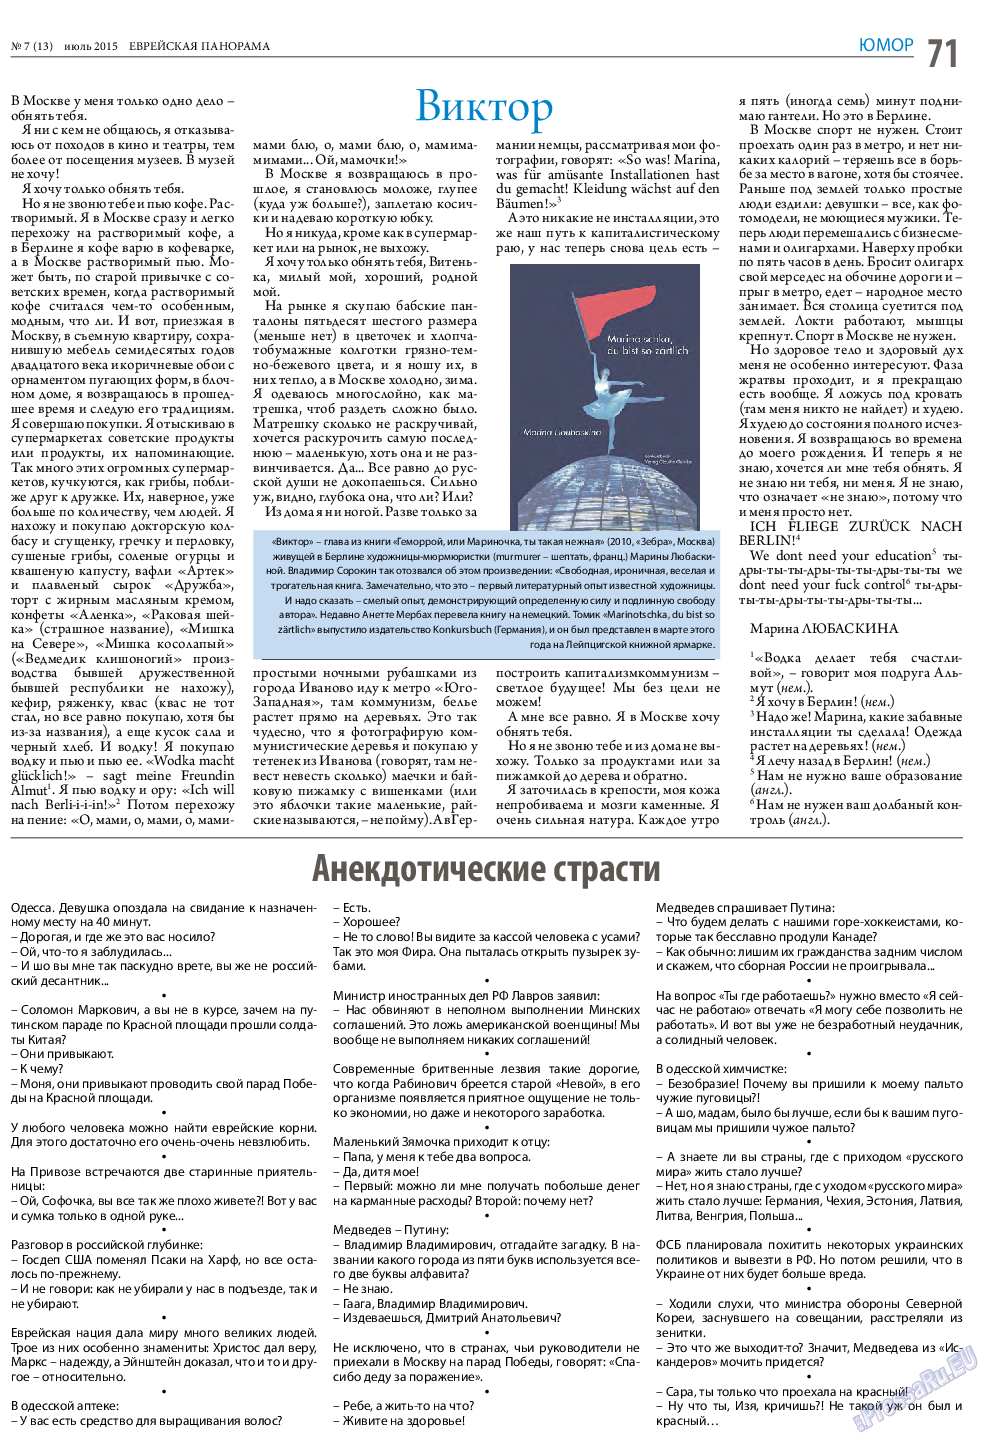 Еврейская панорама, газета. 2015 №7 стр.71